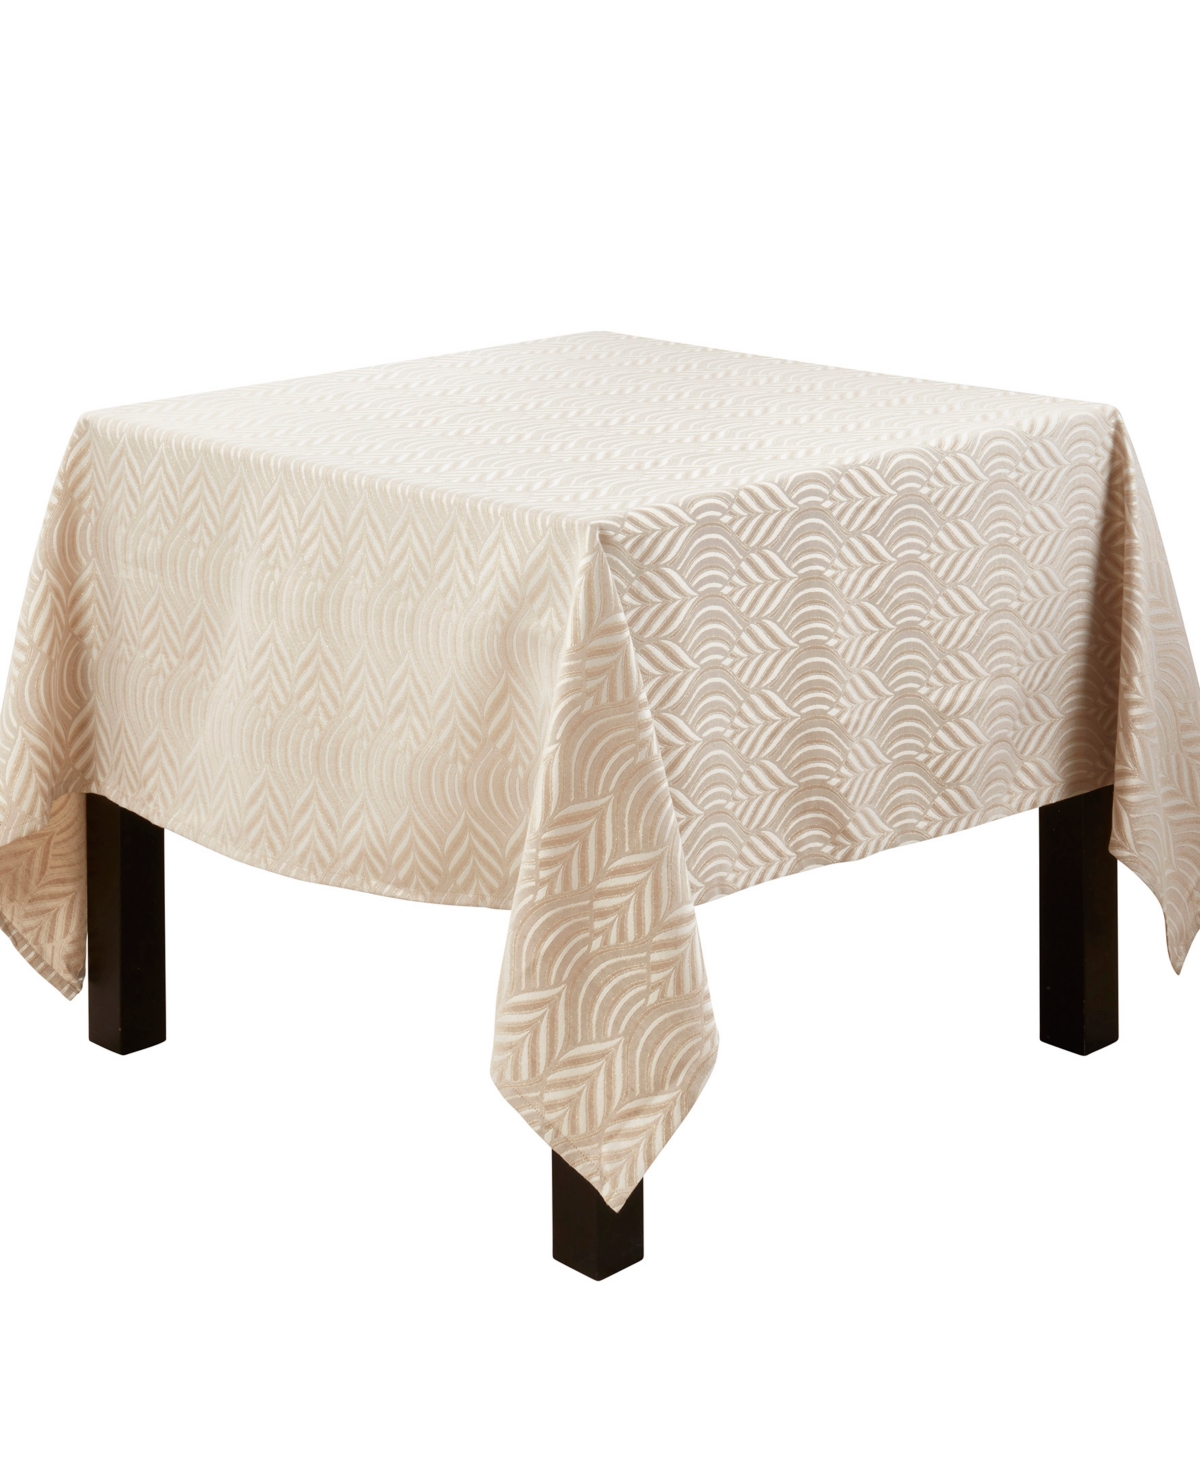 Saro Lifestyle Exquisite Jacquard Design Tablecloth, 72"x72" In Neutral